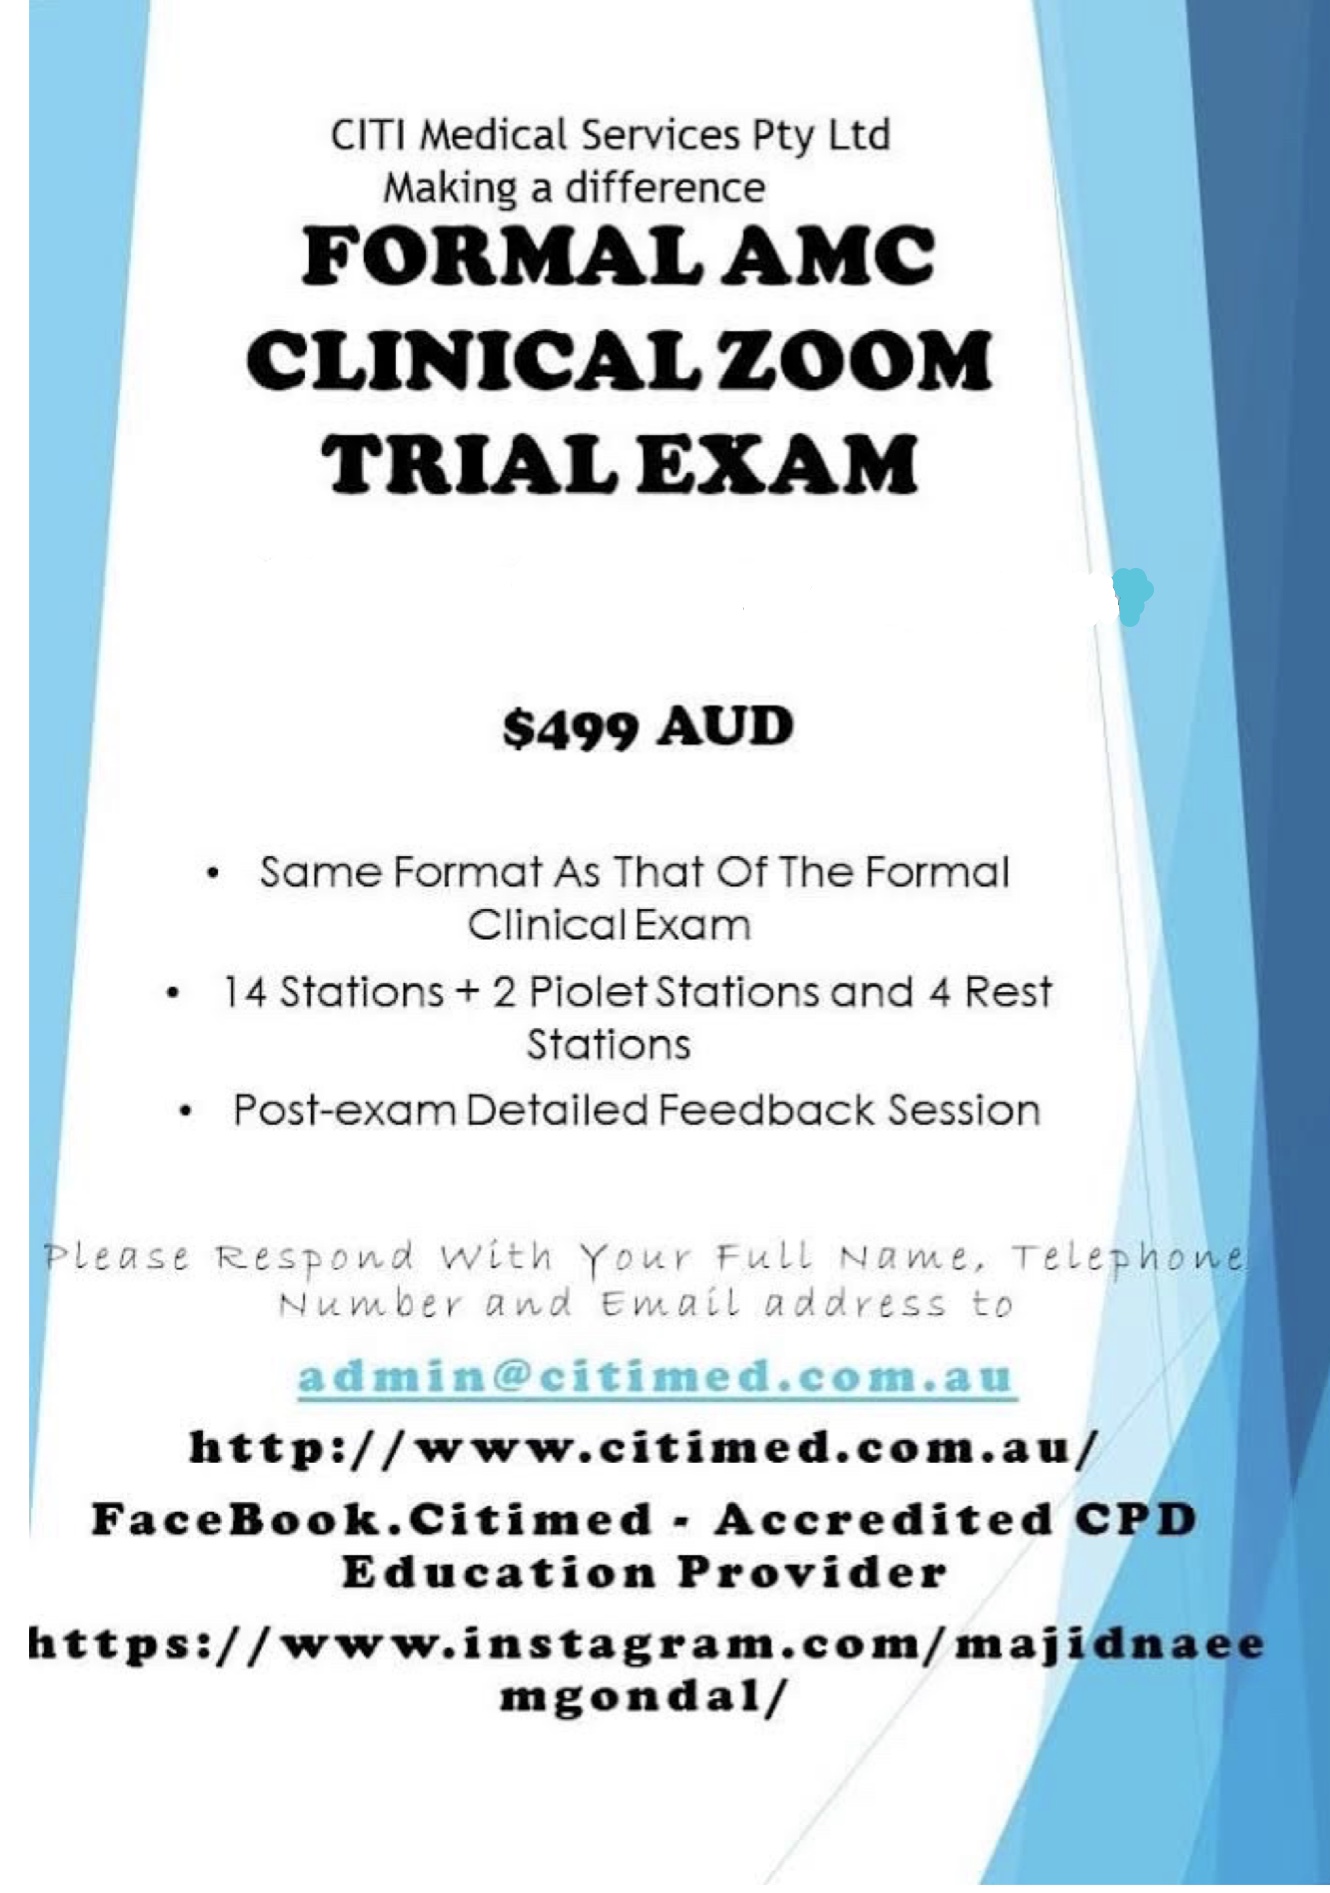 Formal AMC Clinical Zoom Trial Exam